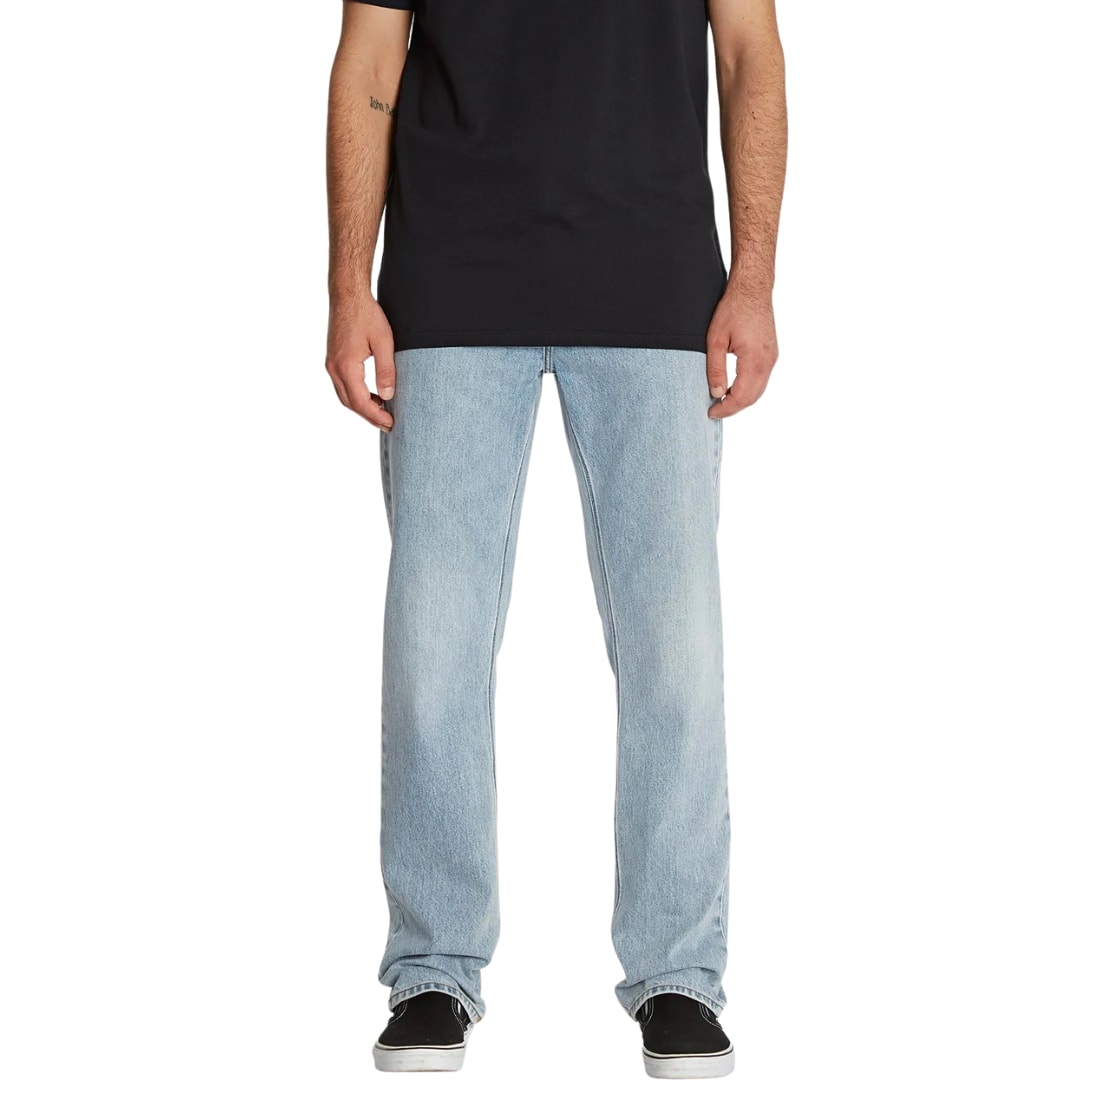 Volcom Solver Denim - Heavy Worn Faded - Mens Regular/Straight Denim Jeans by Volcom